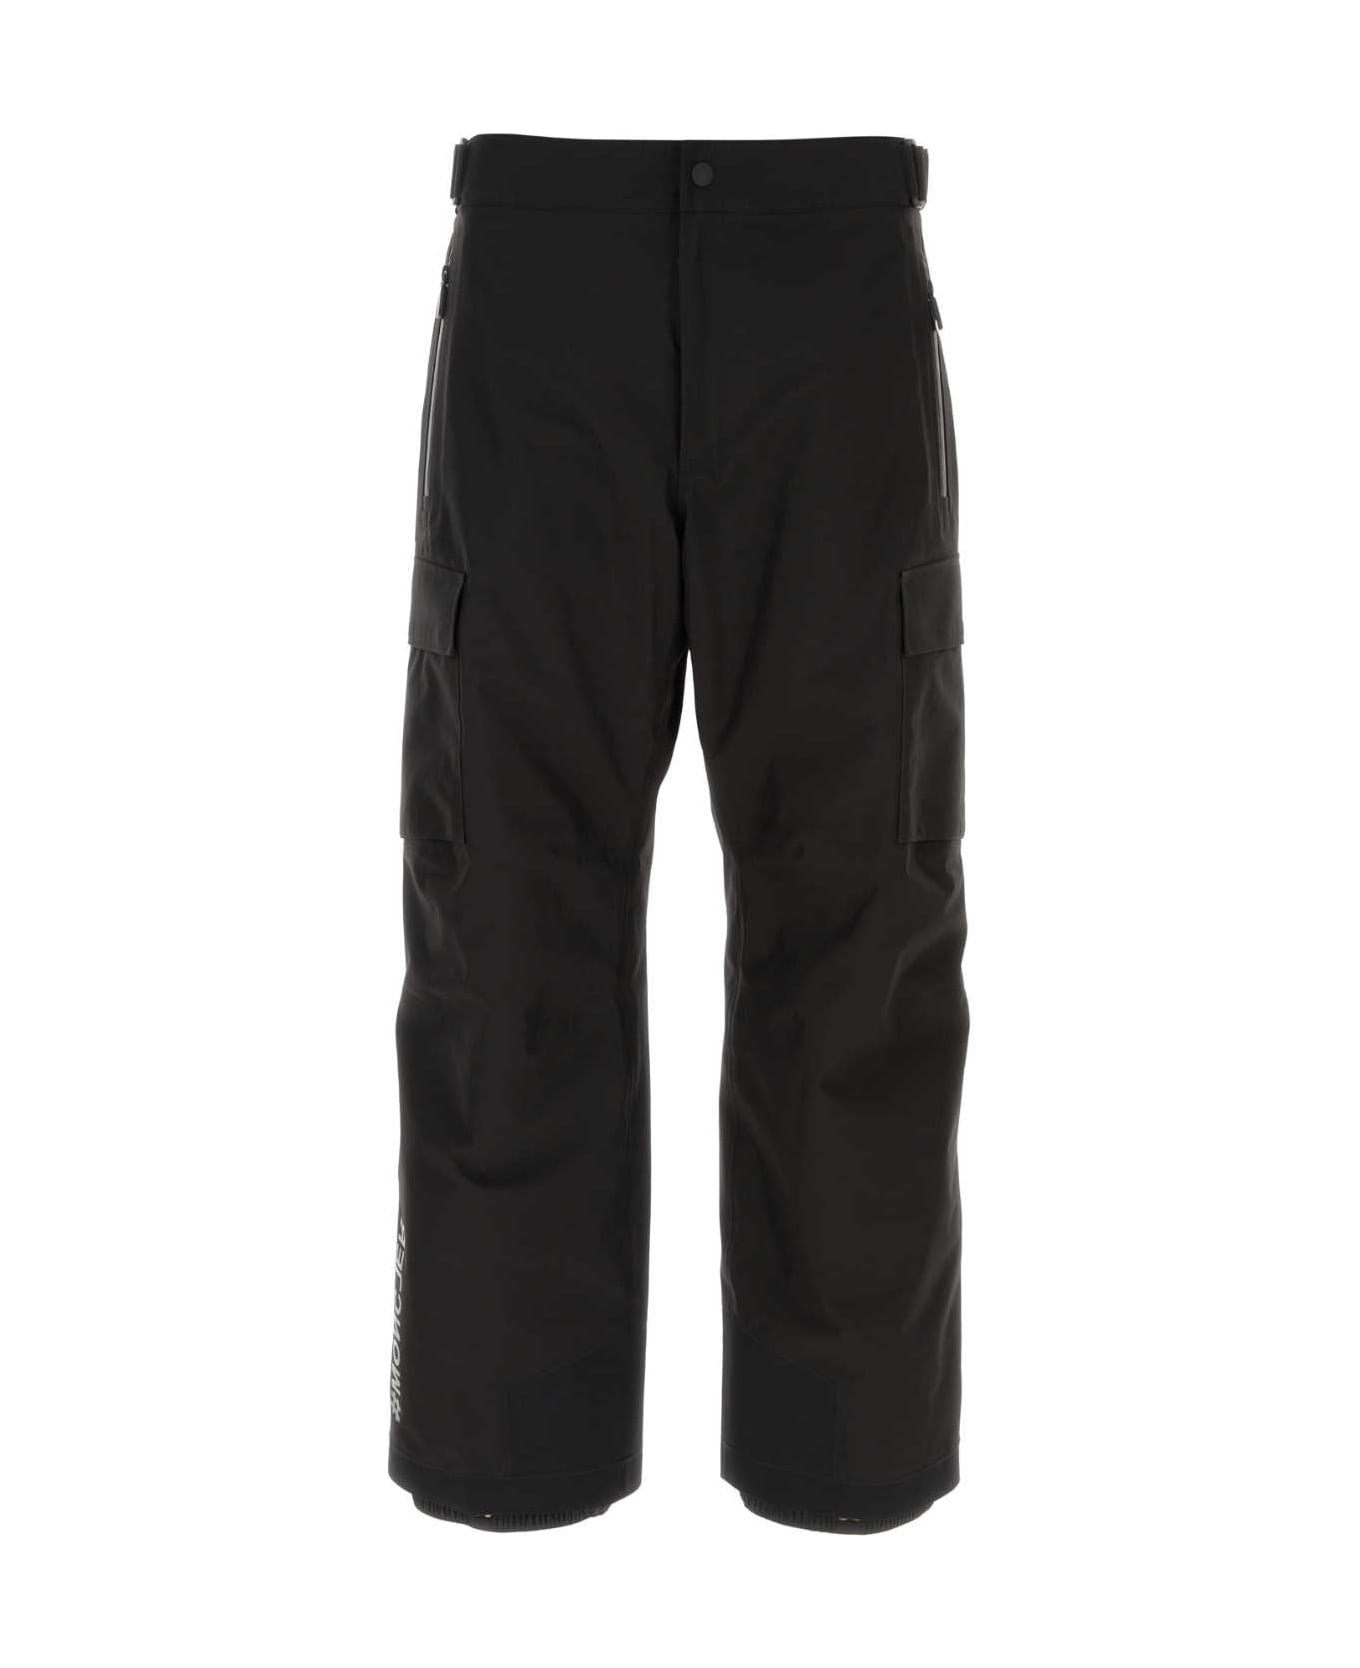 Moncler Grenoble Black Polyester Ski Pant - 999 ボトムス